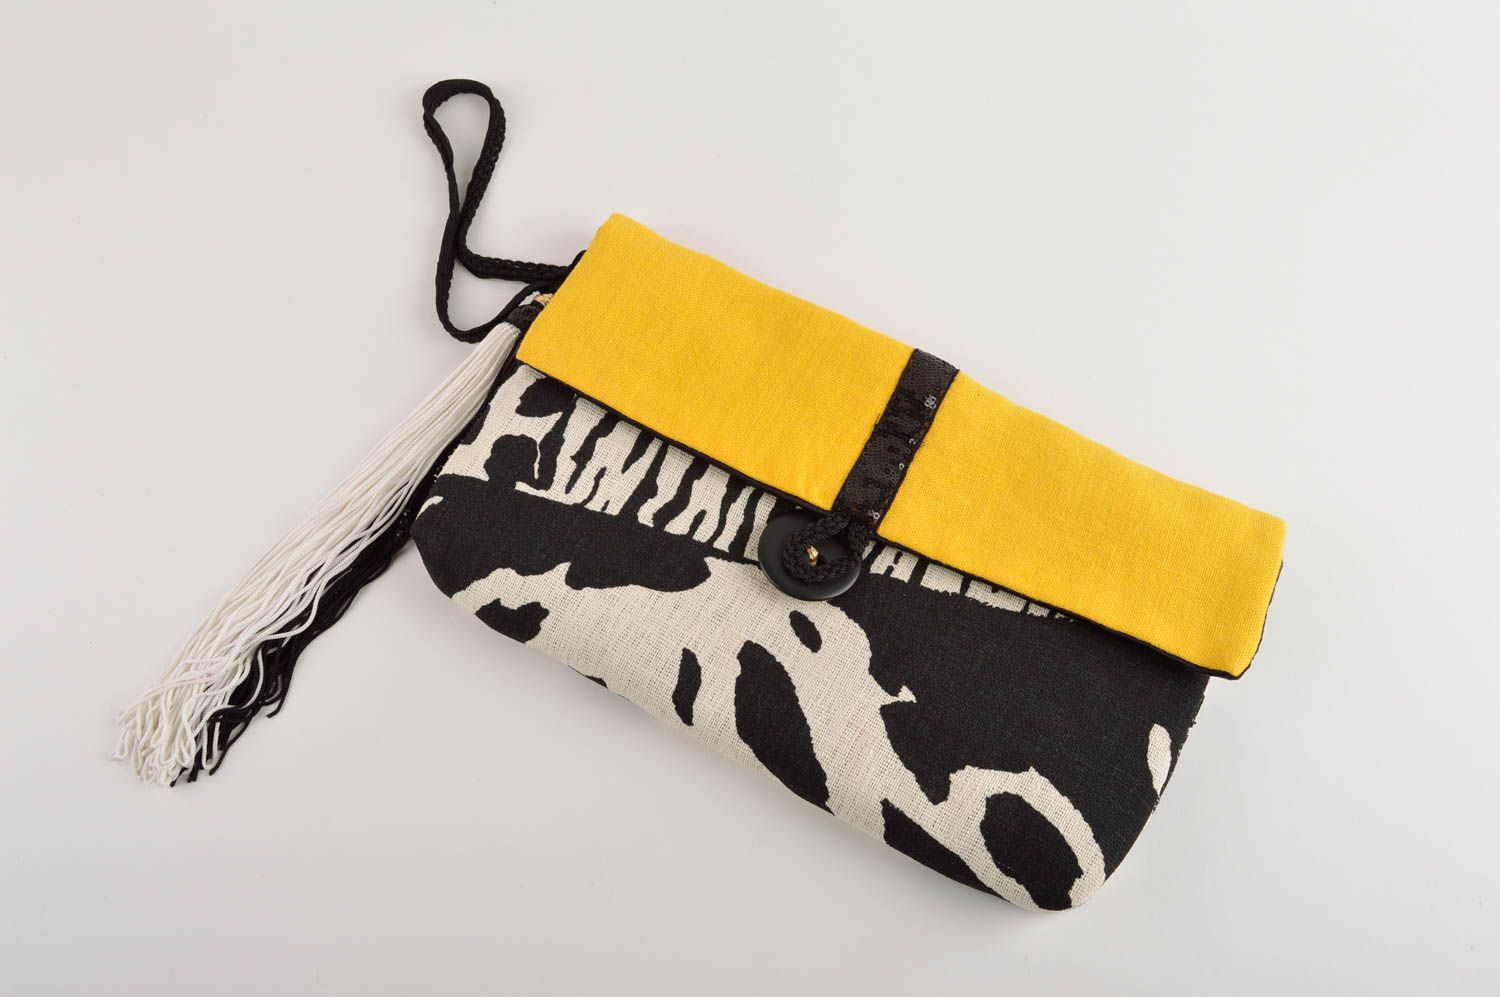 Unusual evening bag designer yellow clutch stylish beautiful accessories photo 1